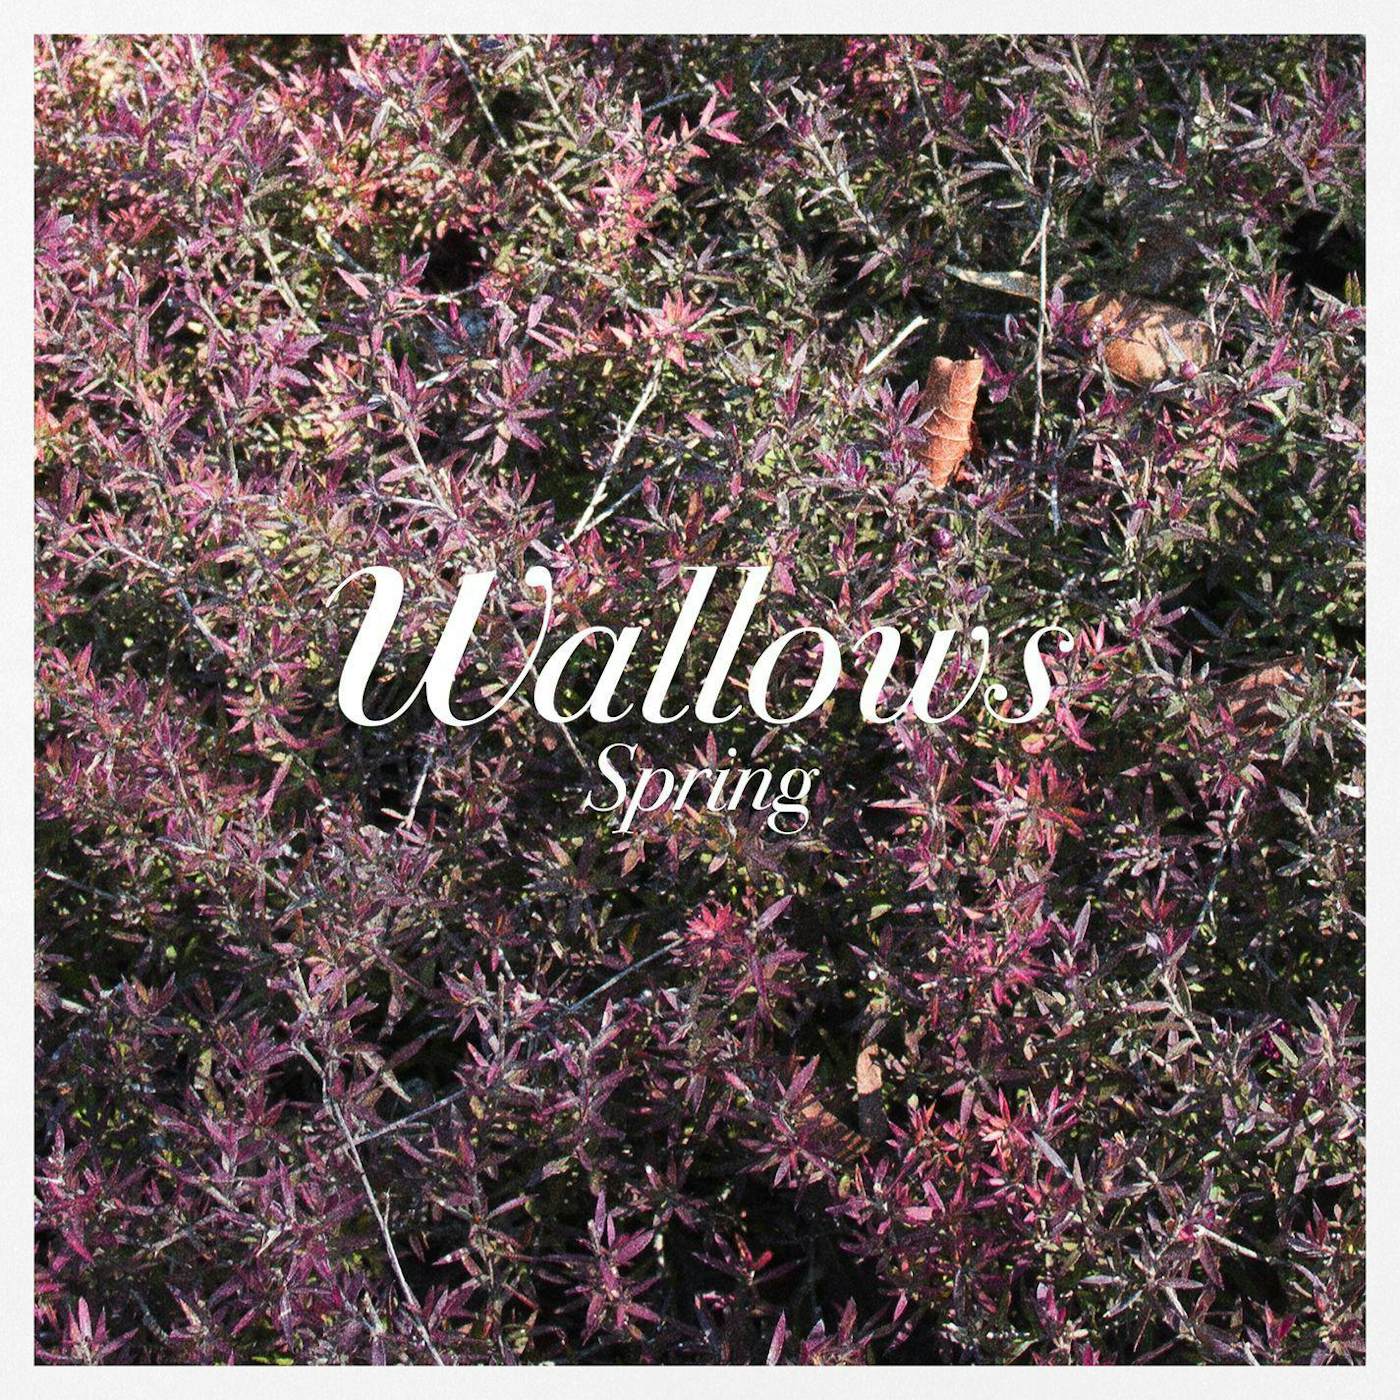 Wallows Spring EP (X) (Pink & Green) Vinyl Record